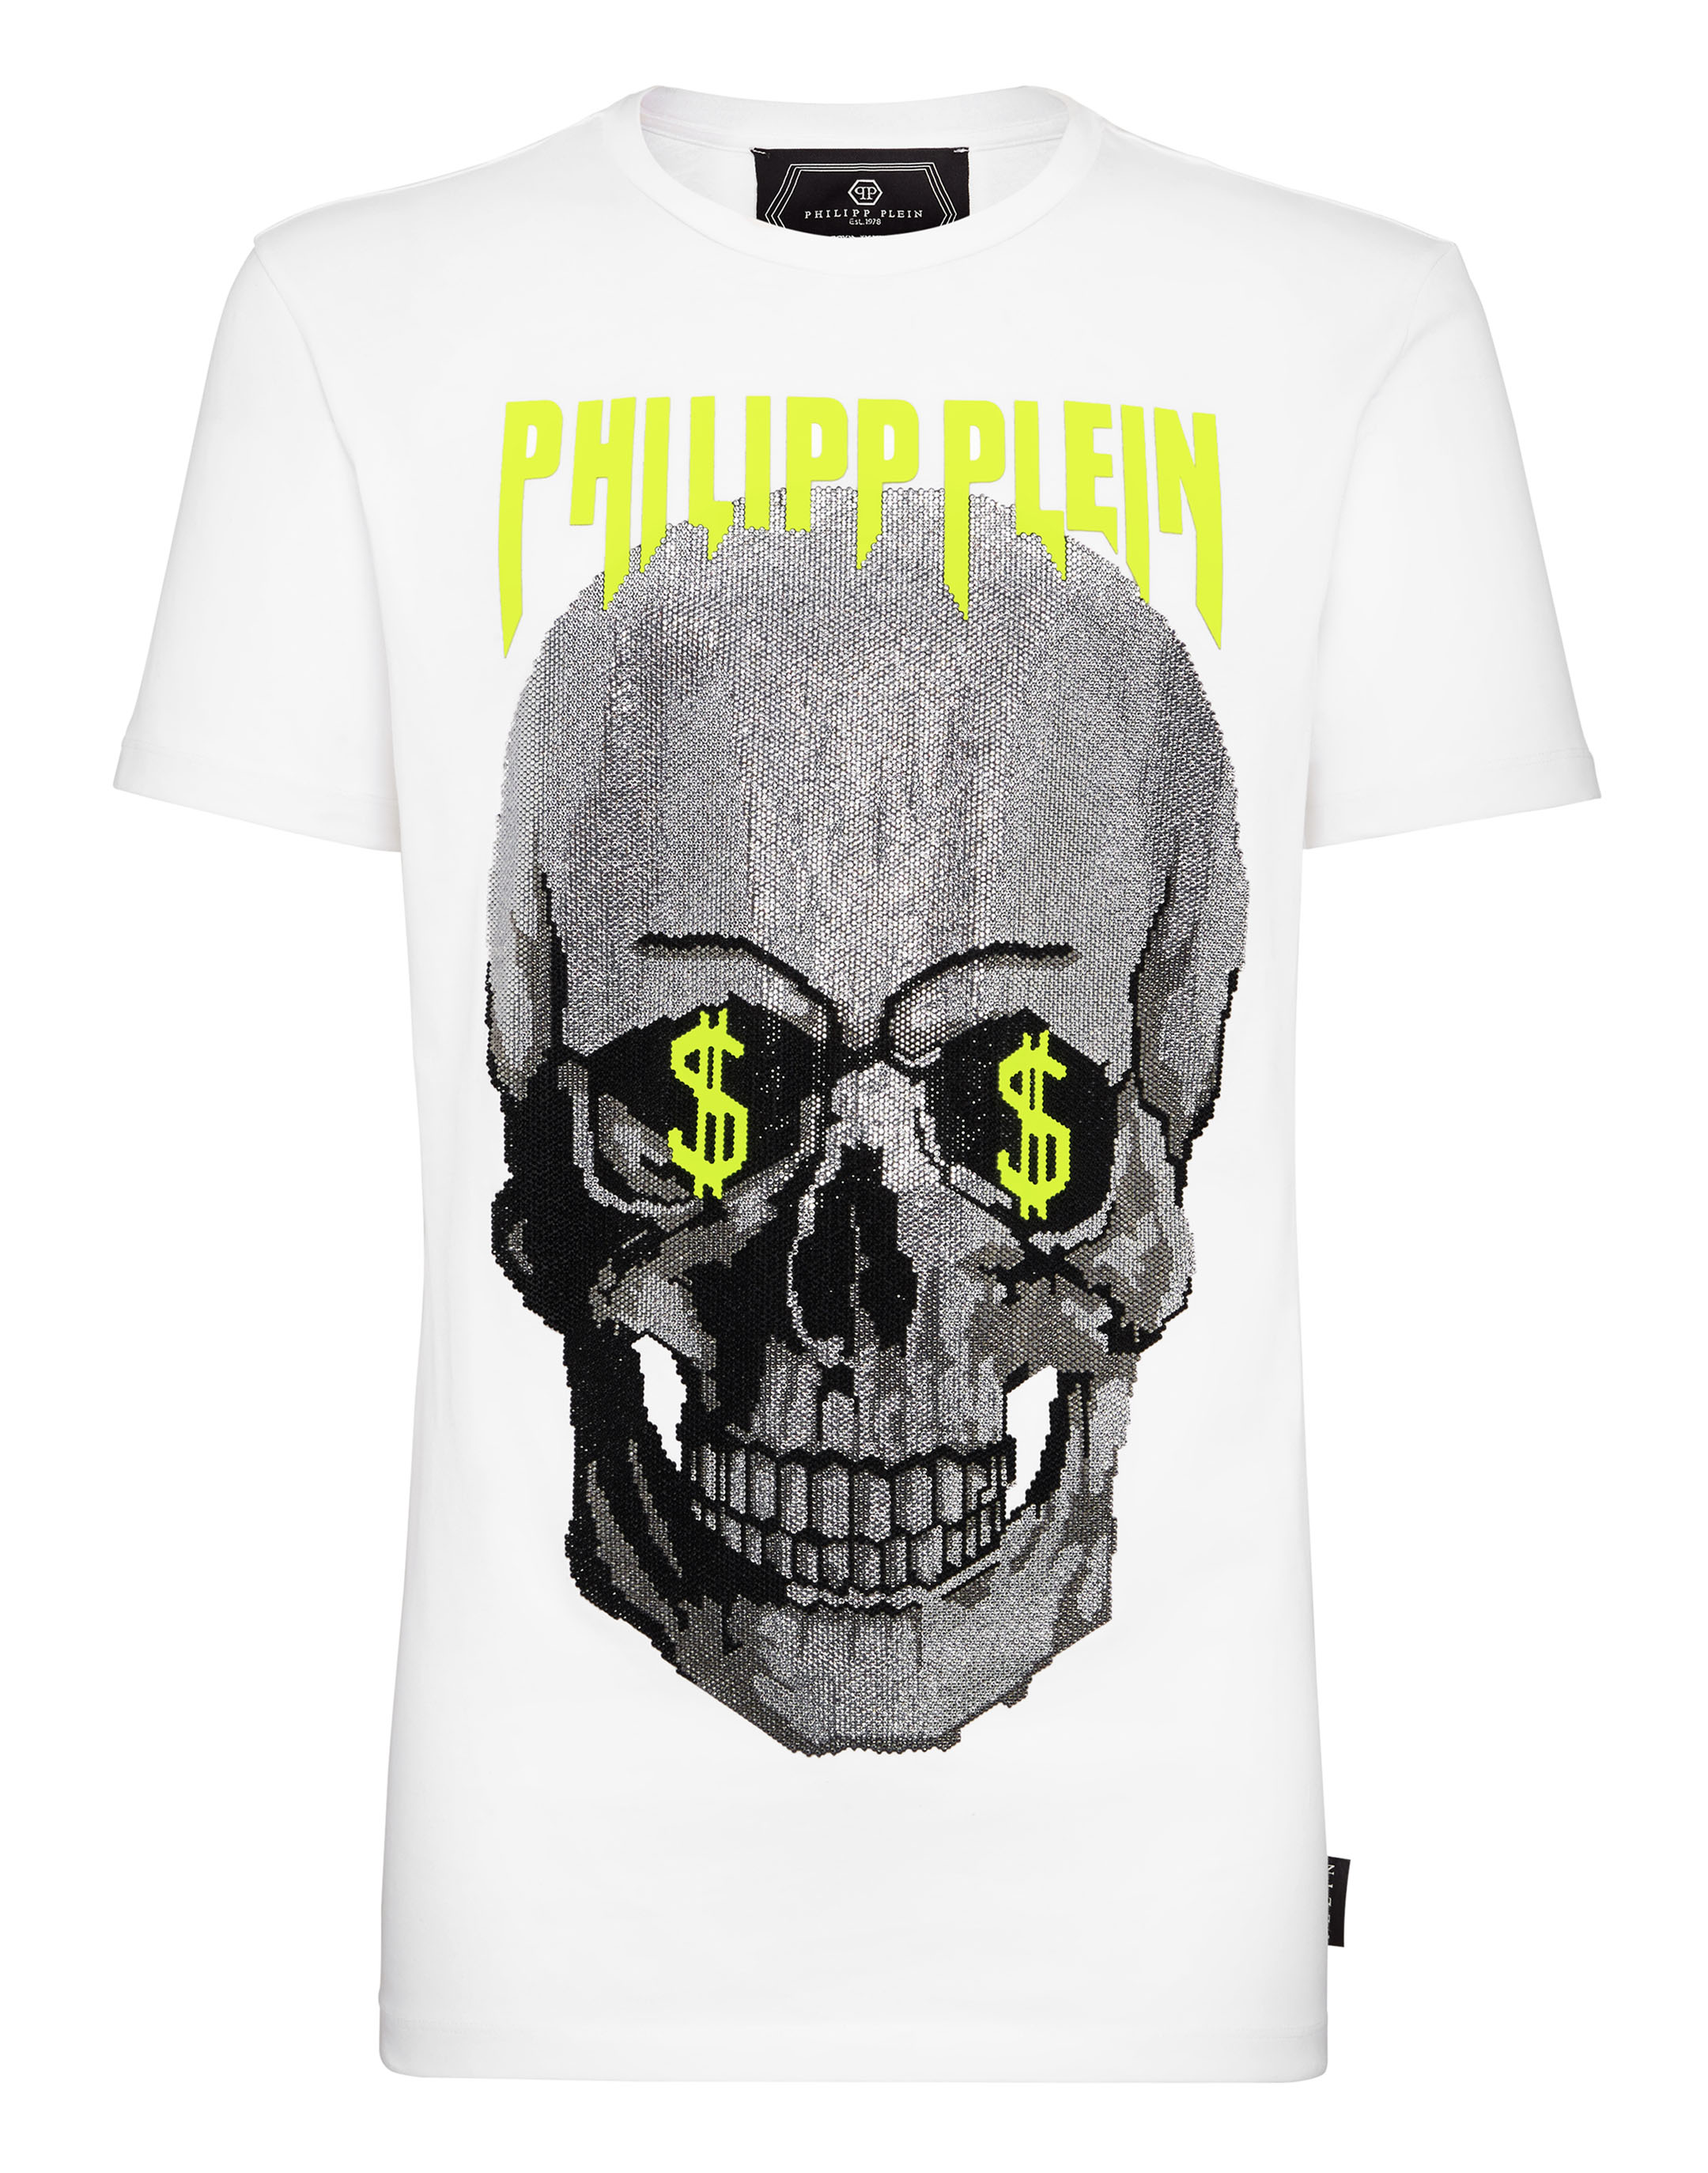 plein philipp t shirt